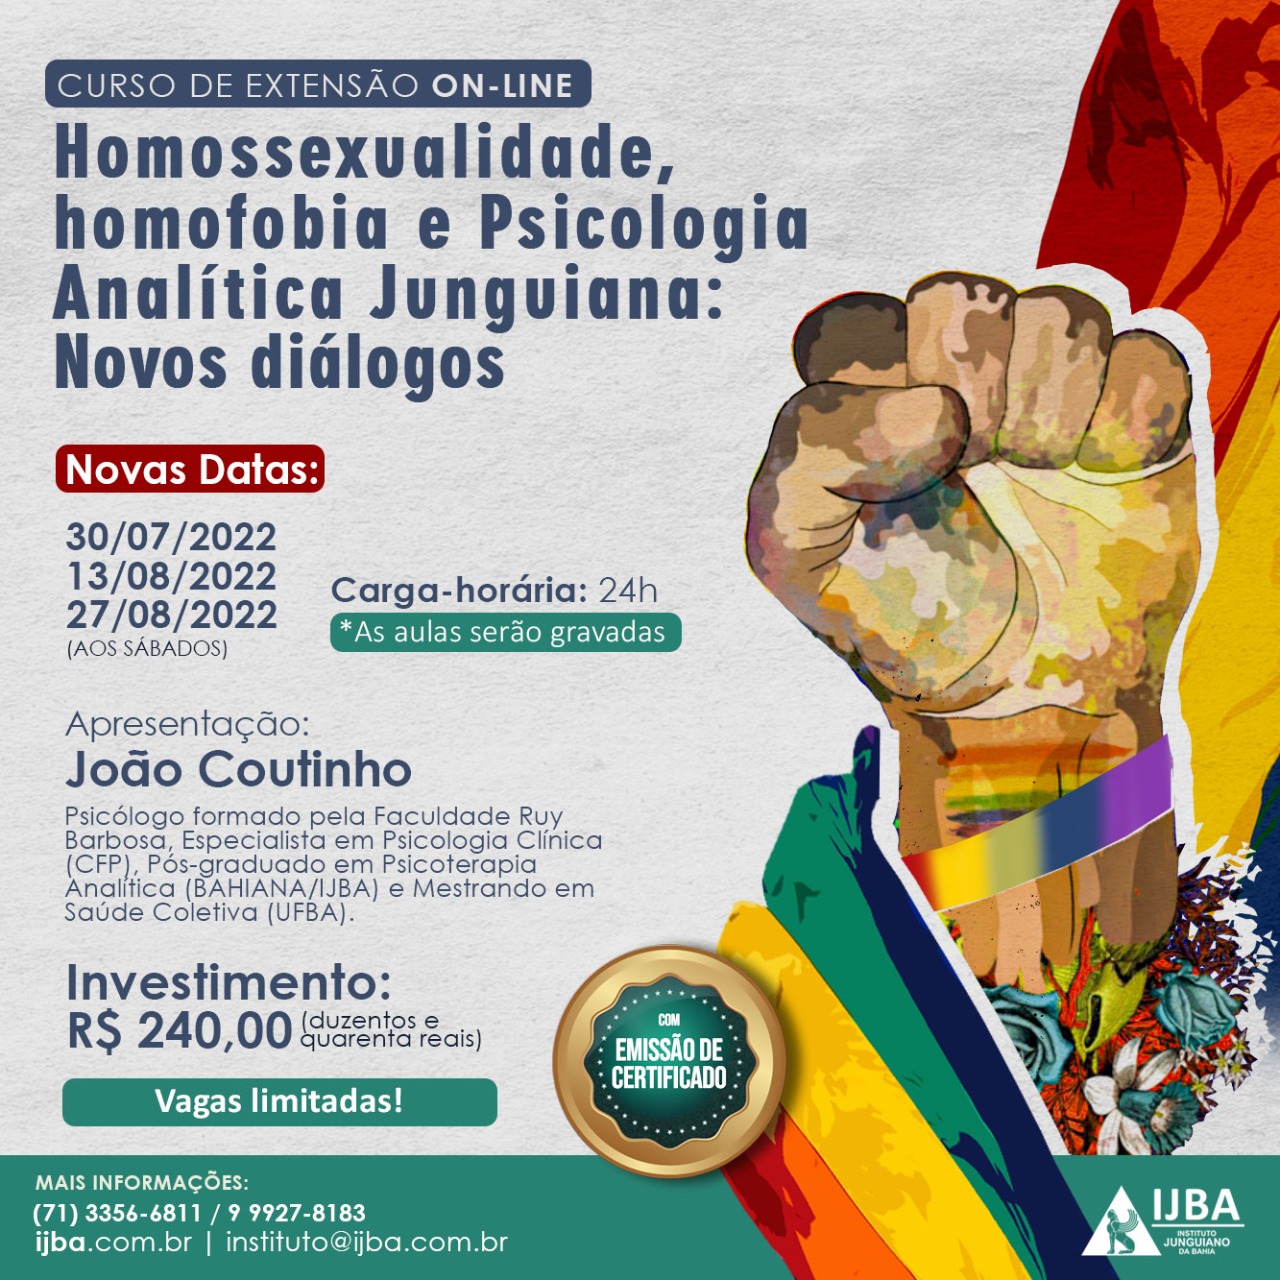 IJBA - Instituto Junguiano da Bahia